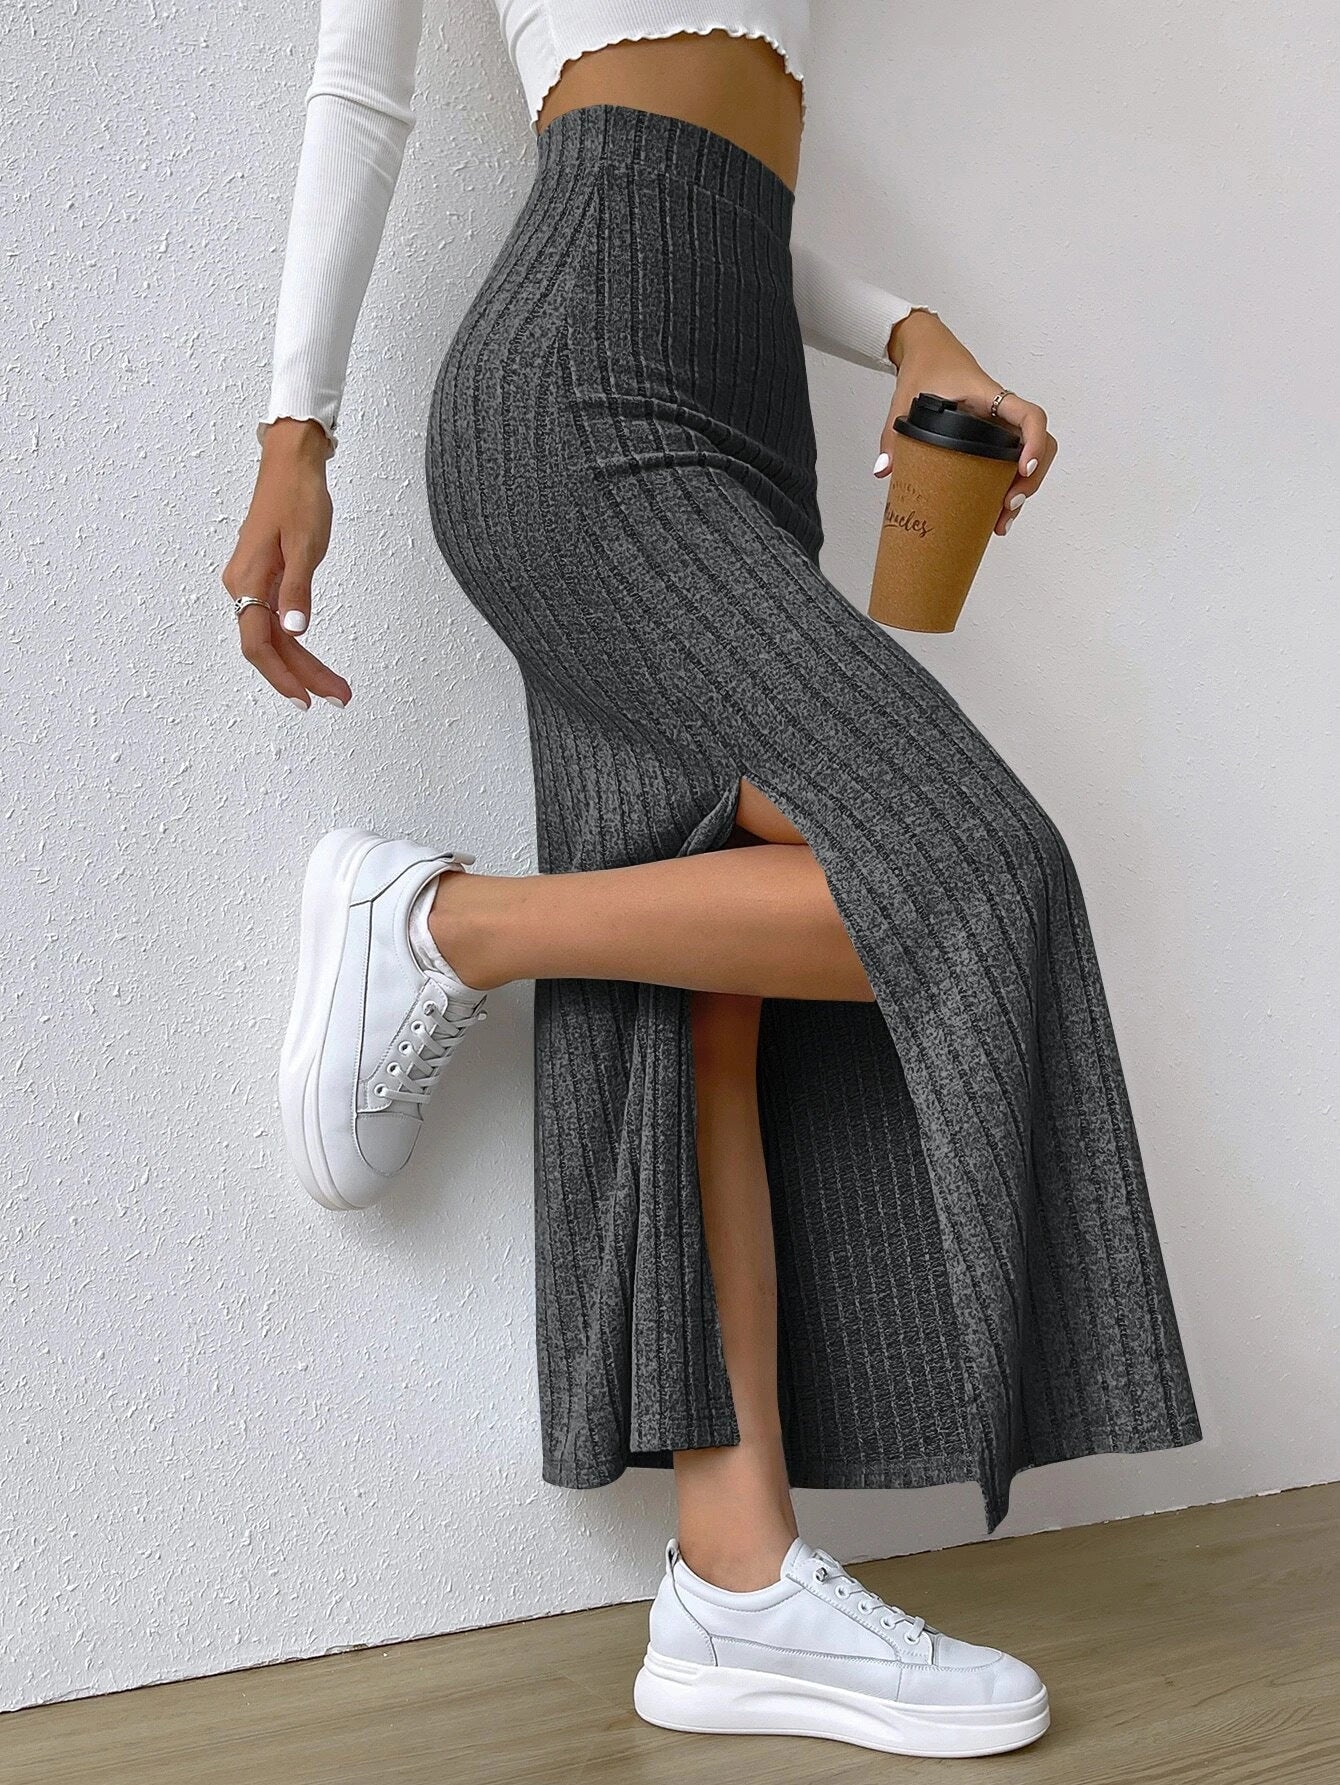 Sexy High Waist Knitted Long Skirts